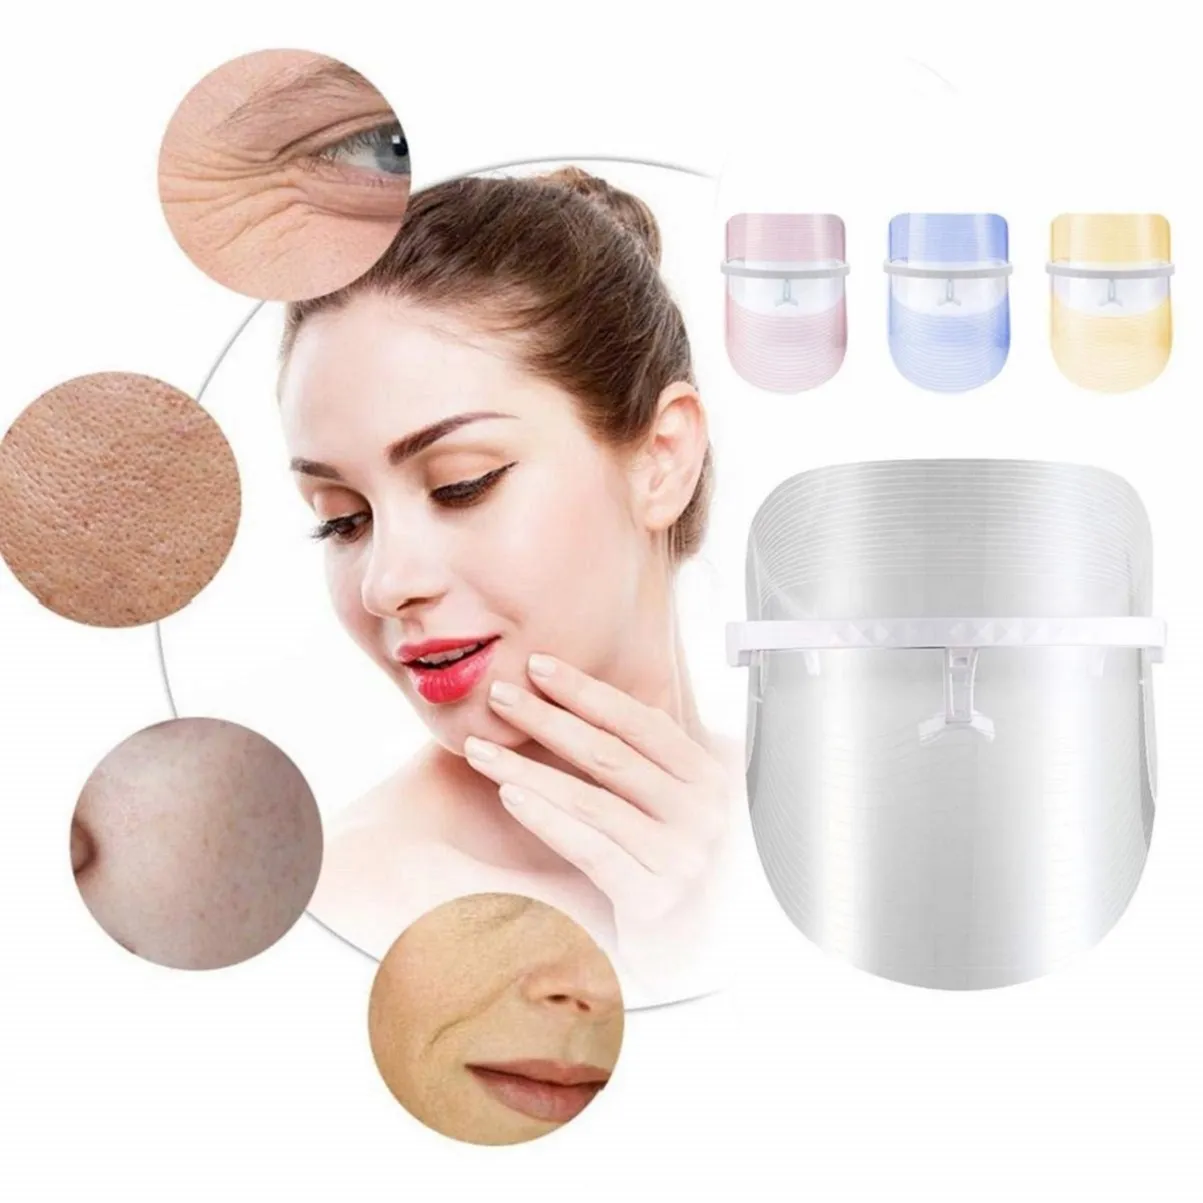 Portable Facial Care Tools Skin Beauty LED Facial Skin Mask 3 Colors